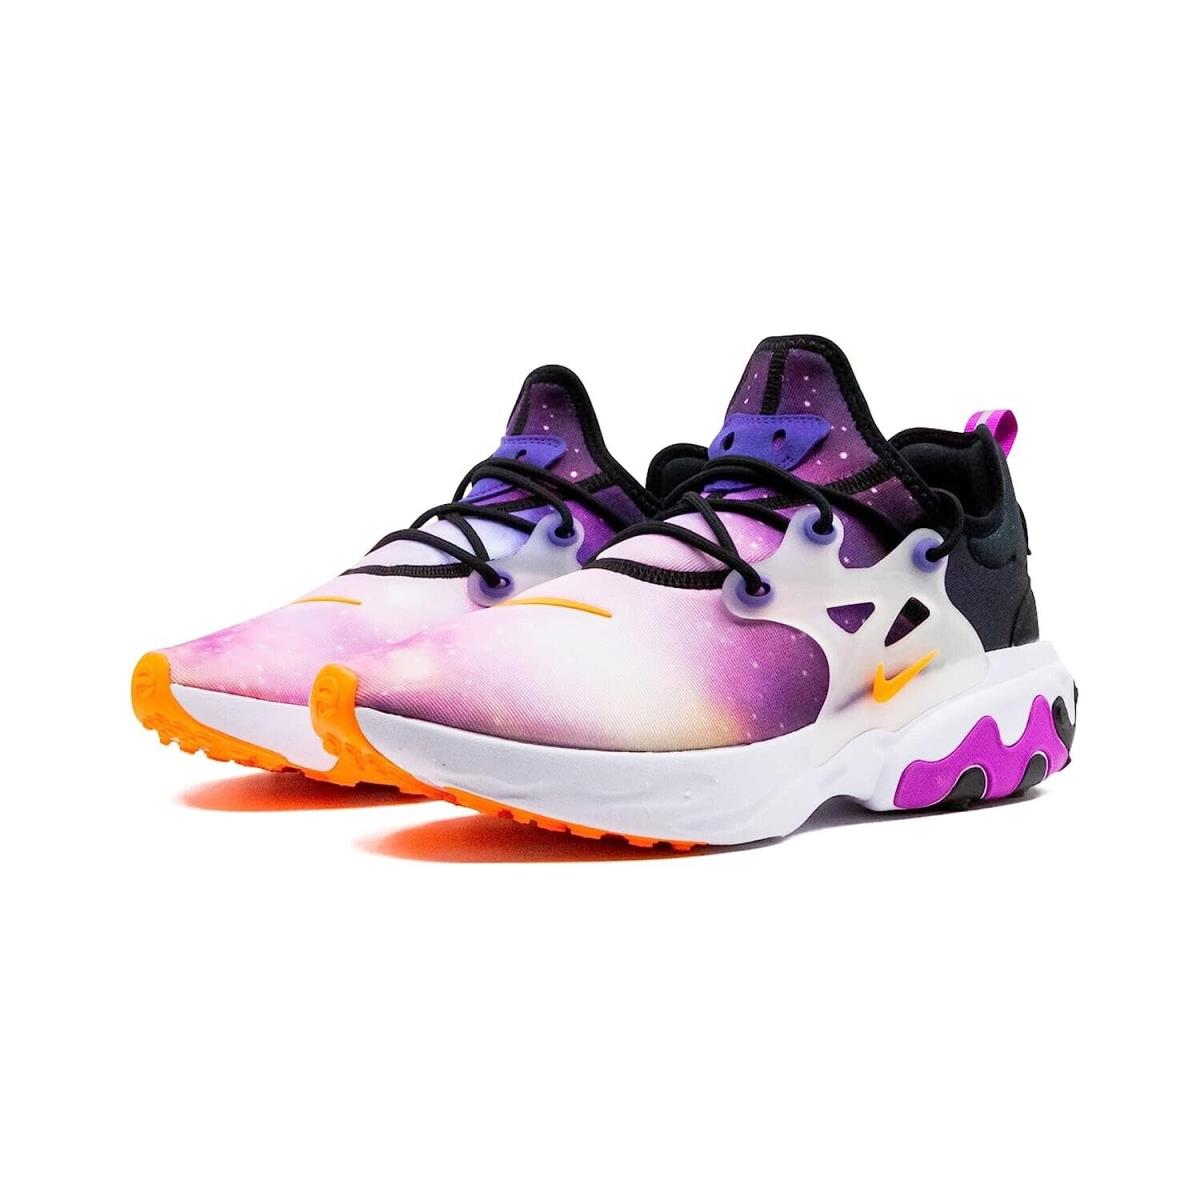 Nike Mens React Presto Premium CN7664-002 Multicolor Casual Sneaker Shoes Sz 9.5 - Multicolor